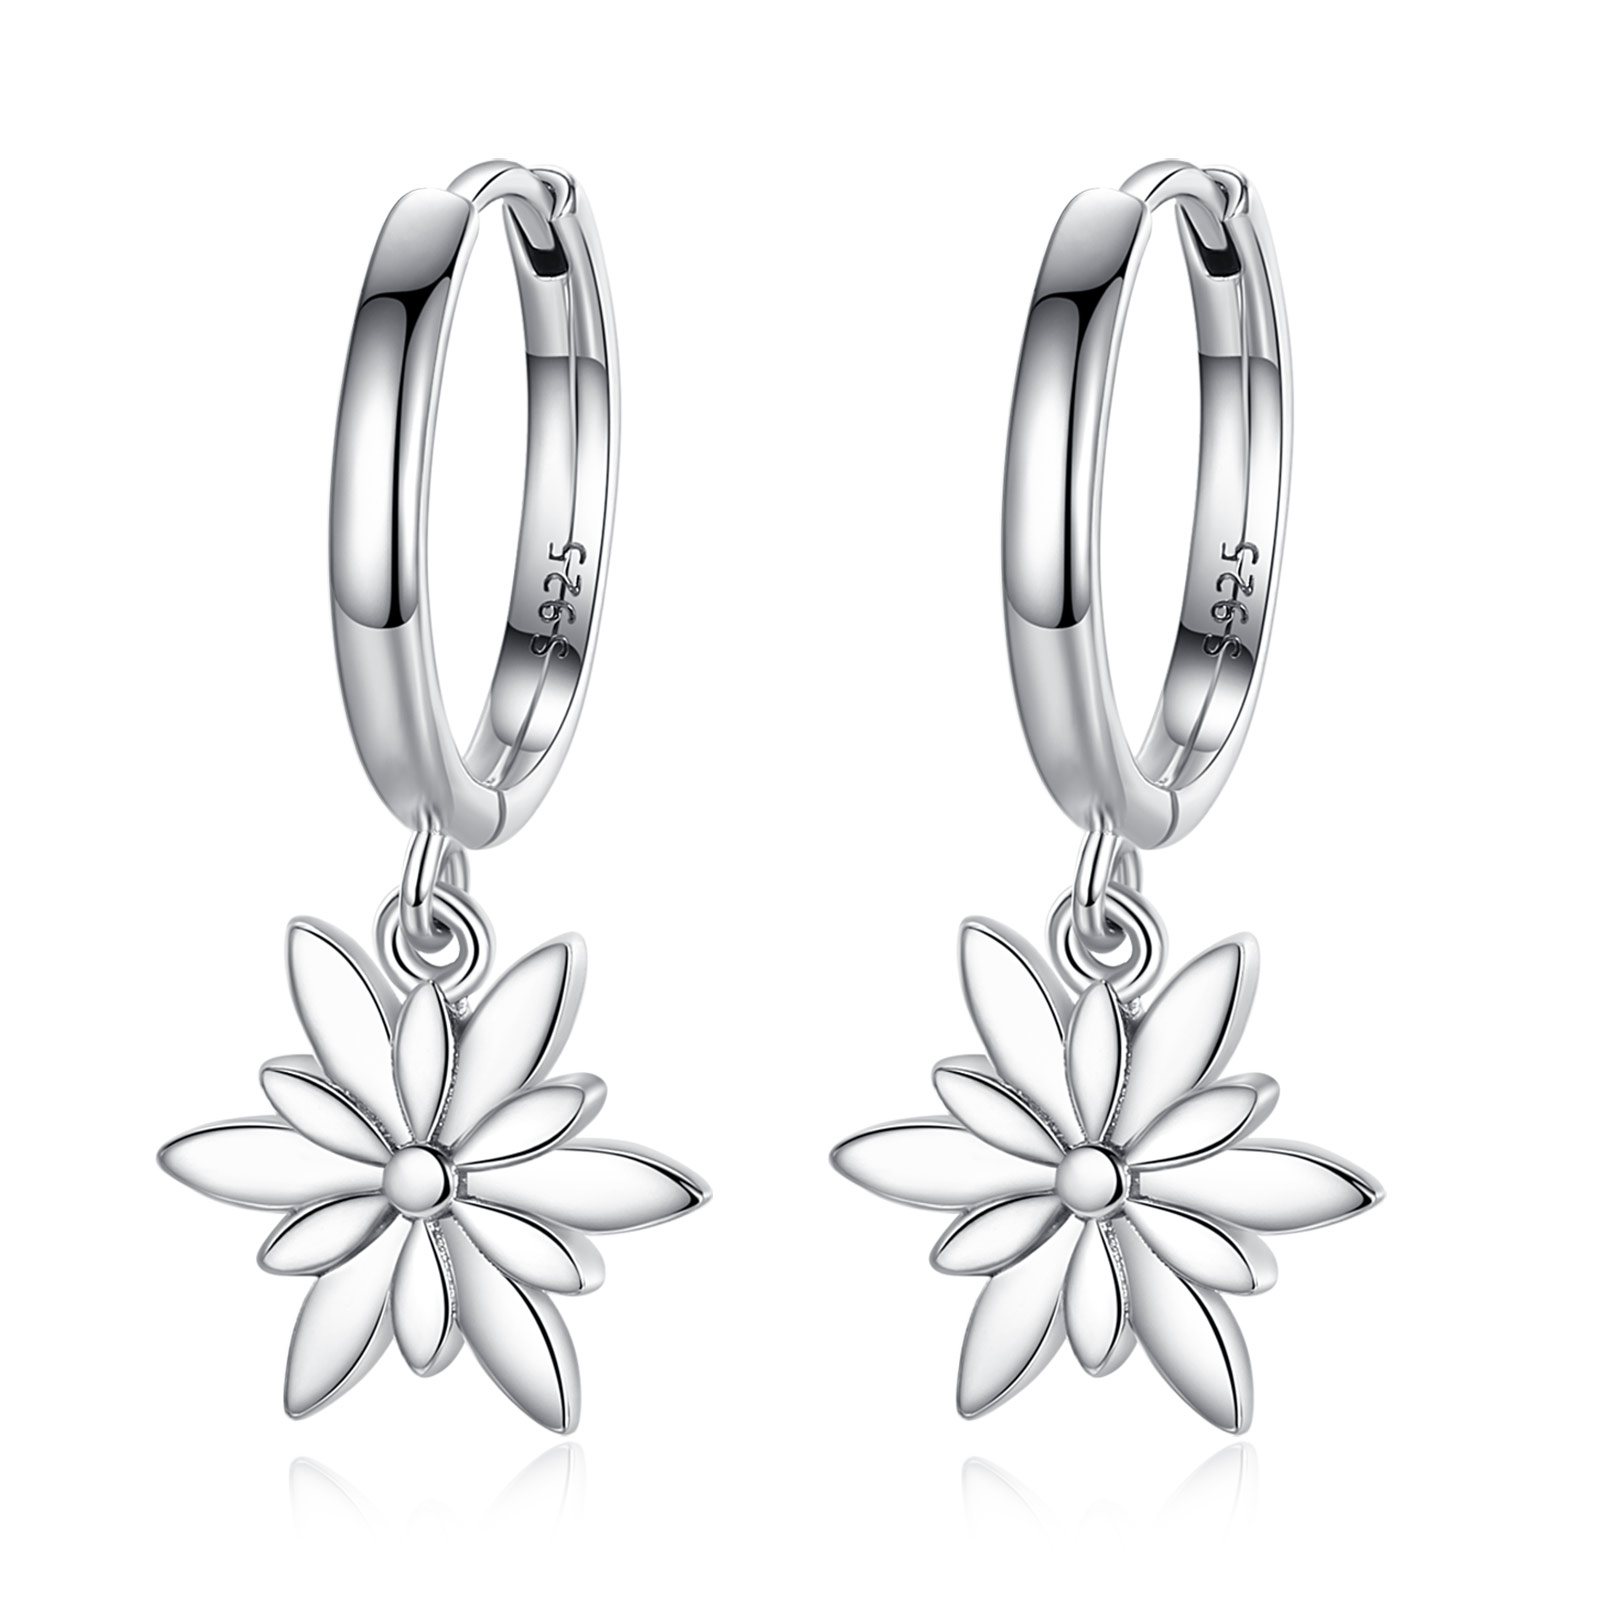 Merryshine Christmas Gift 925 Sterling Silver Elegant Snowflake Hoop Earrings for Women